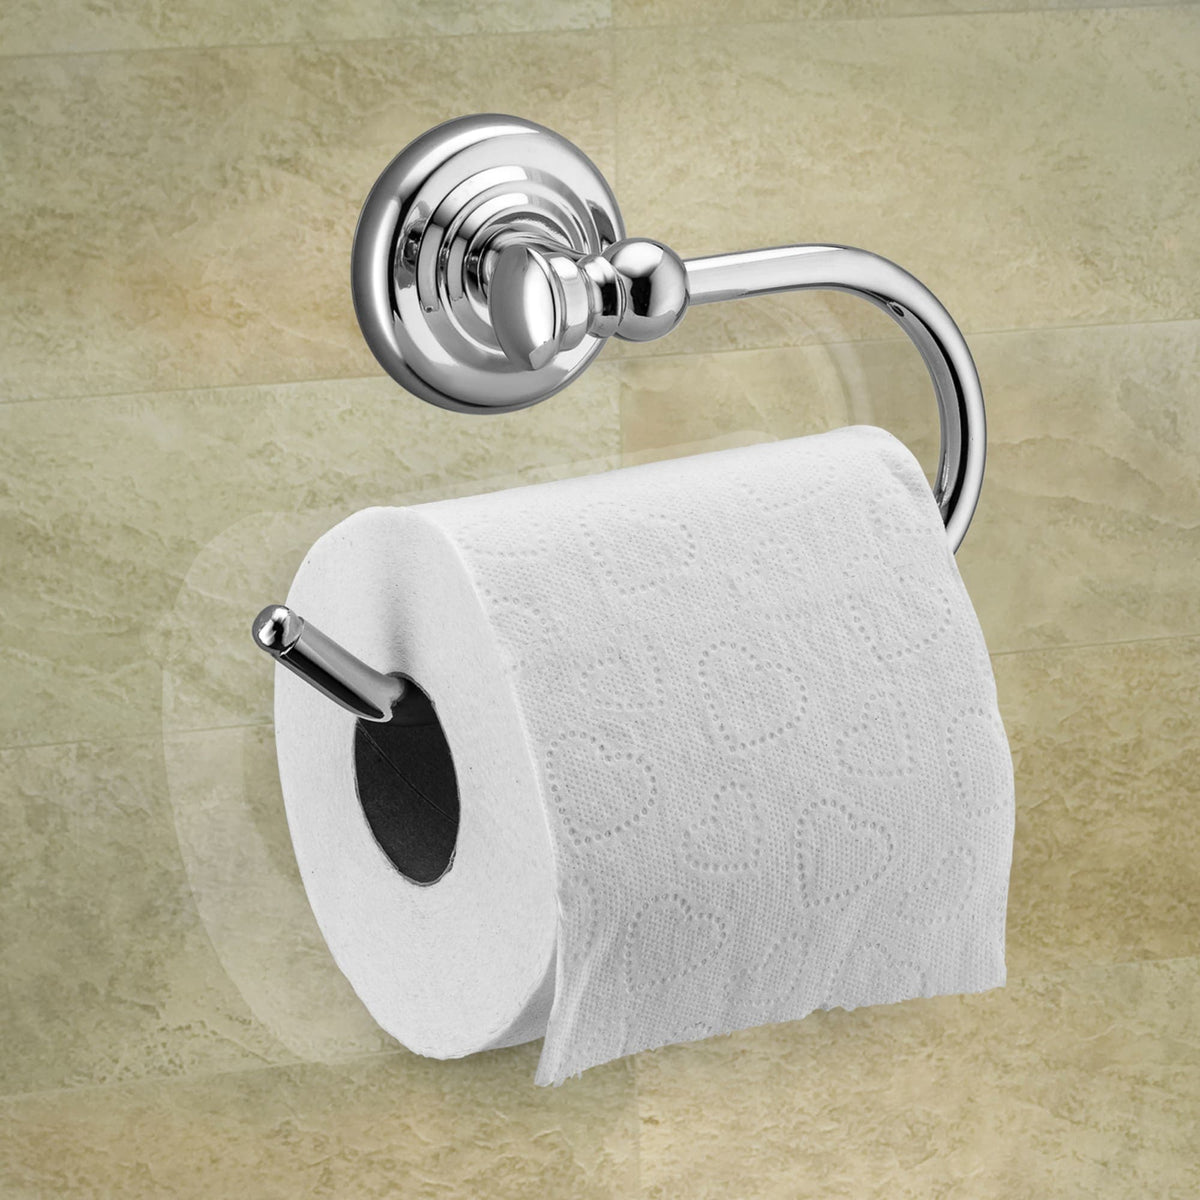 Home Basics Wall-Mounted Toilet Paper Holder, BATH ORGANIZATION